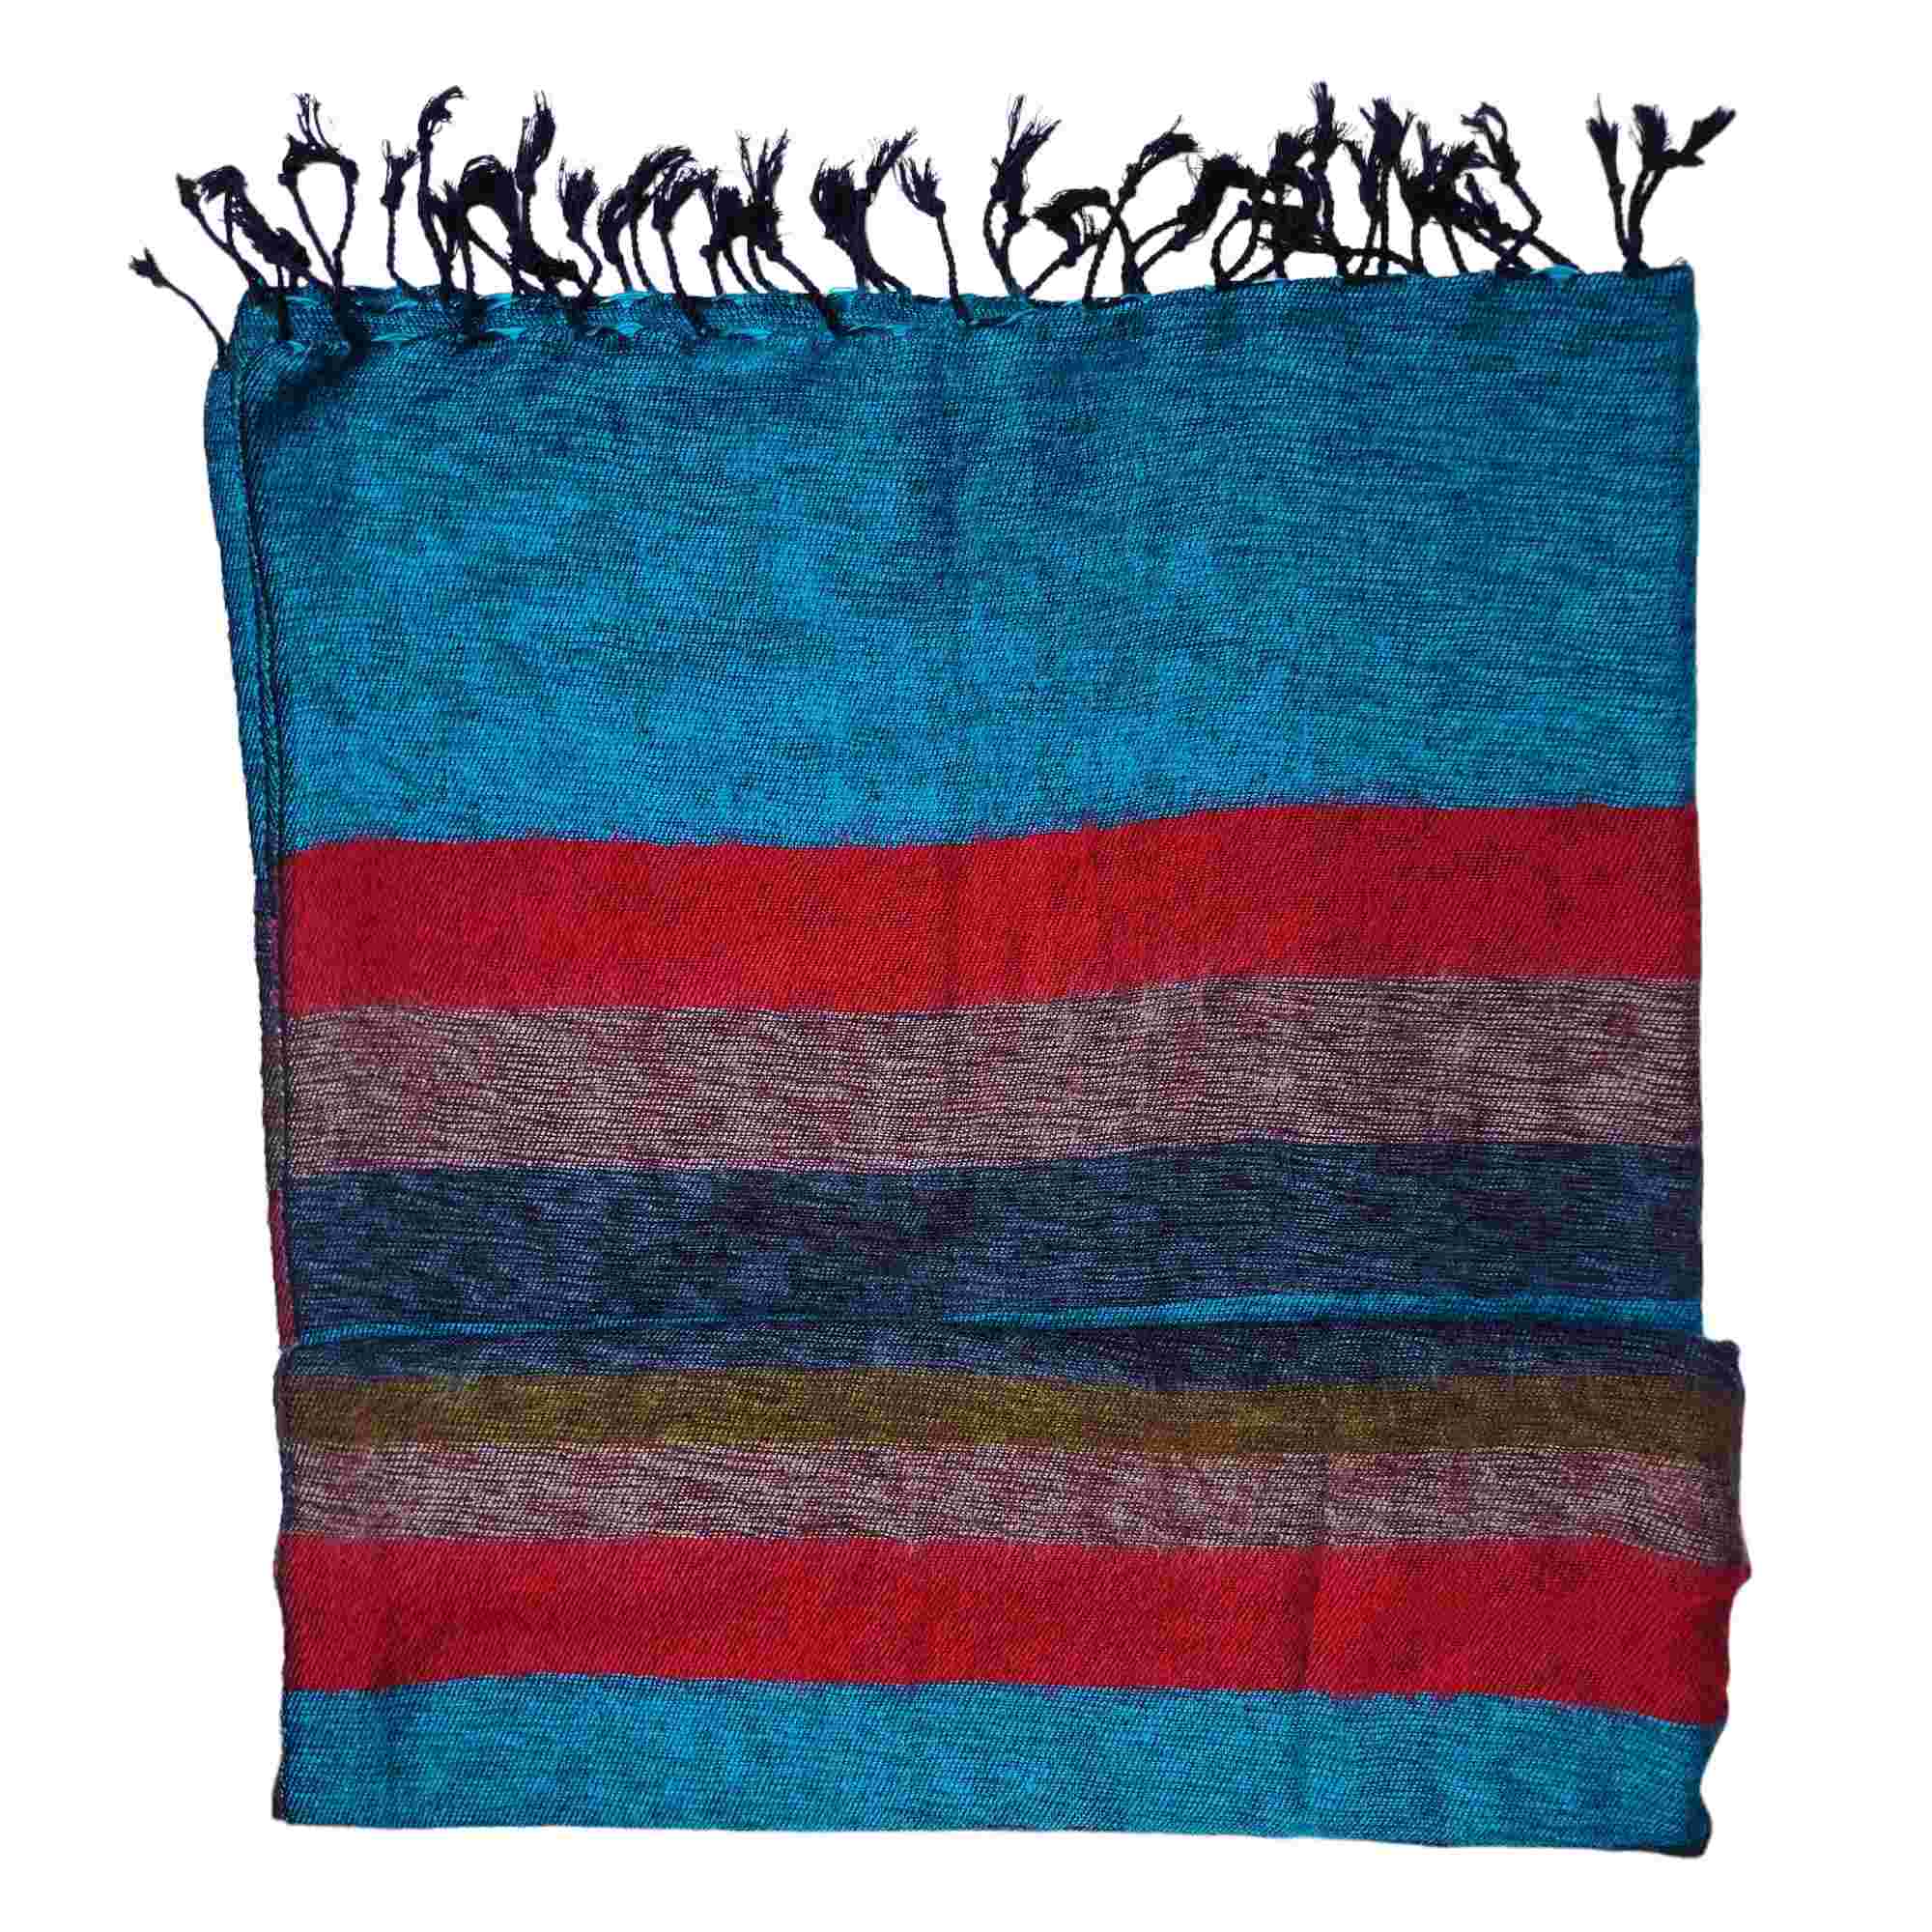 Nepali Handmade Made acrylic Yak Wool Stripe Blanket, large Size